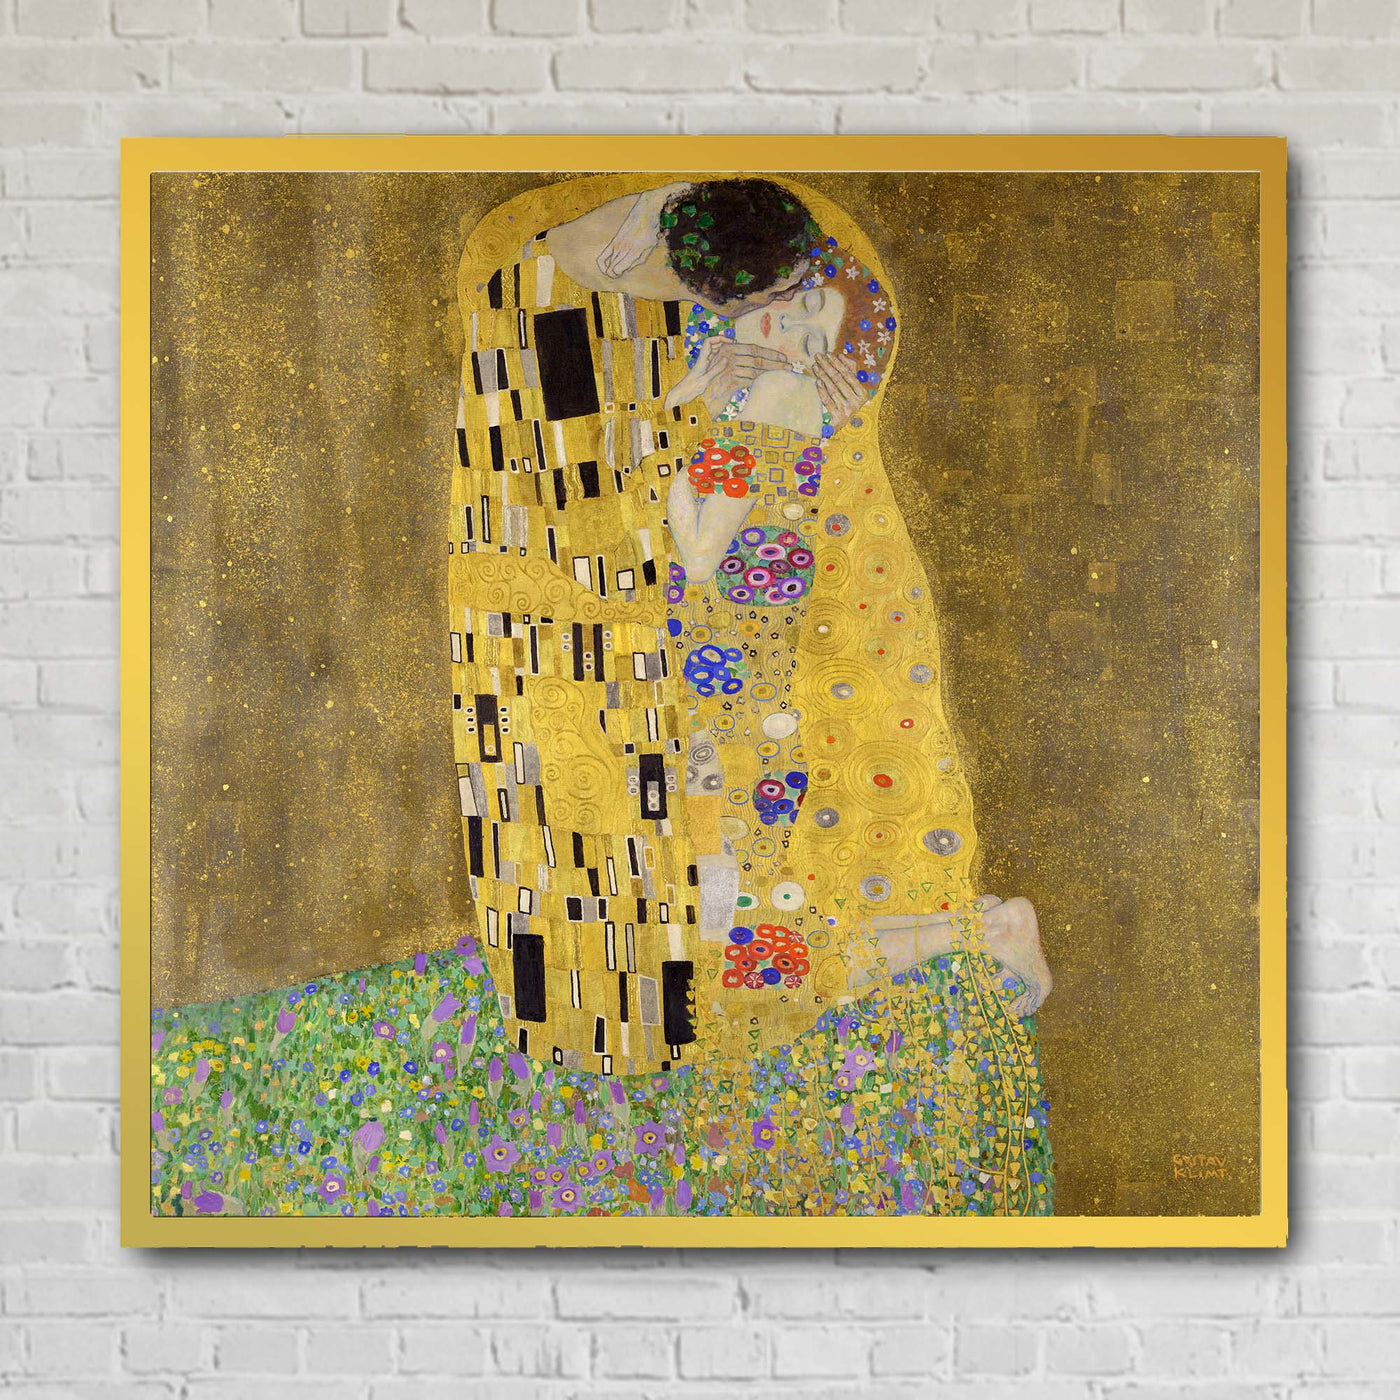 "The Kiss" by Gustav Klimt on Canvas, Aluminium, Acrylic, Framed Prints or Print-only